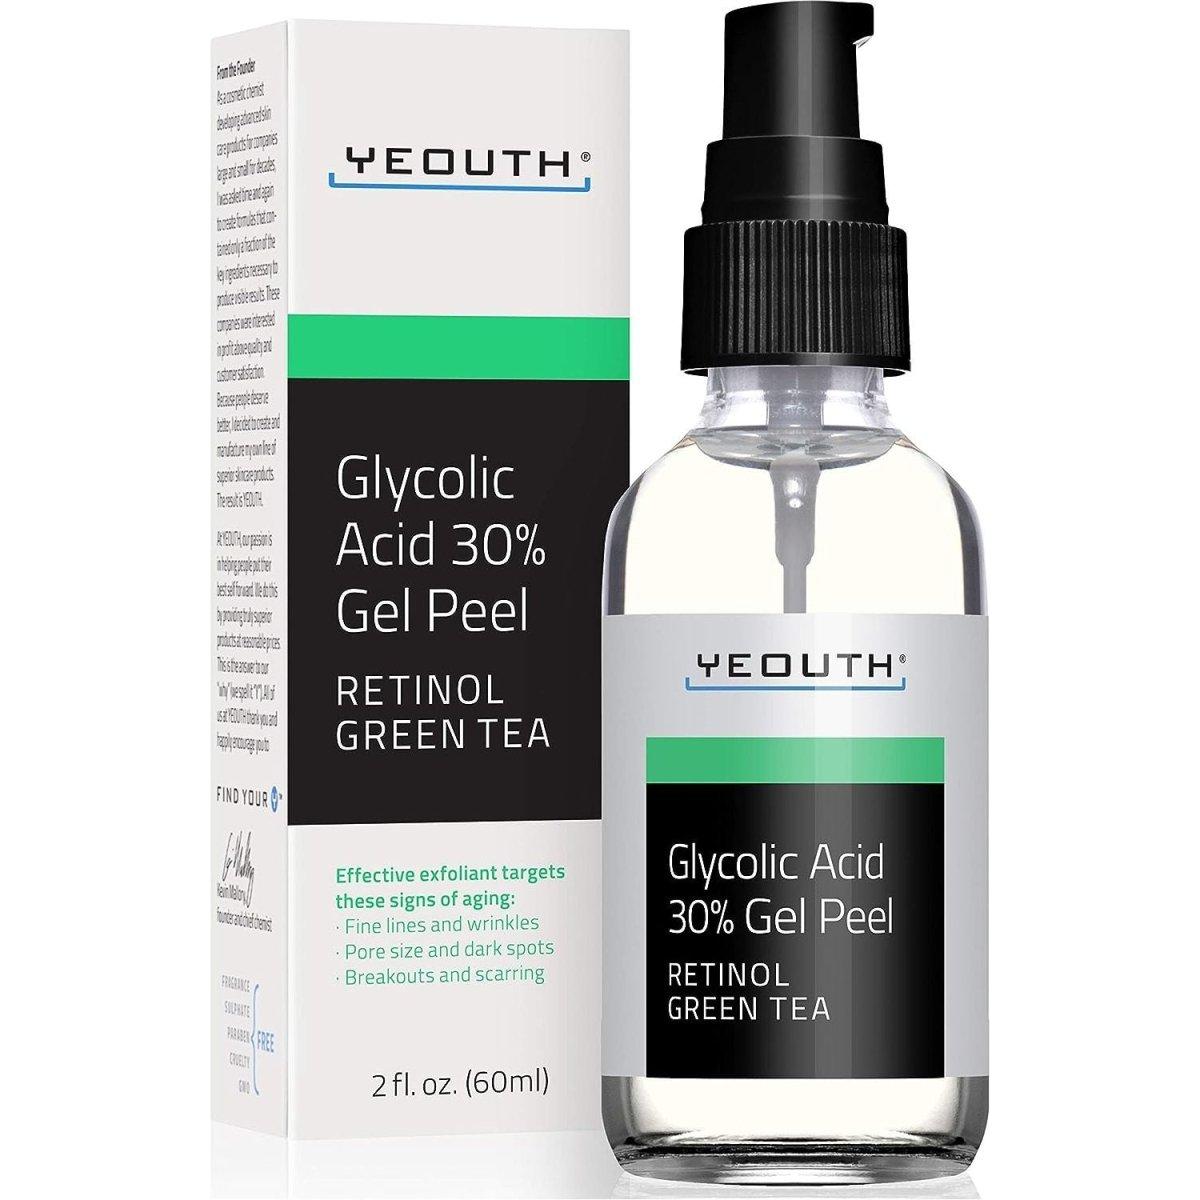 YEOUTH Glycolic Acid 30% Gel Peel 60ml (2 fl oz) - DG International Ventures Limited